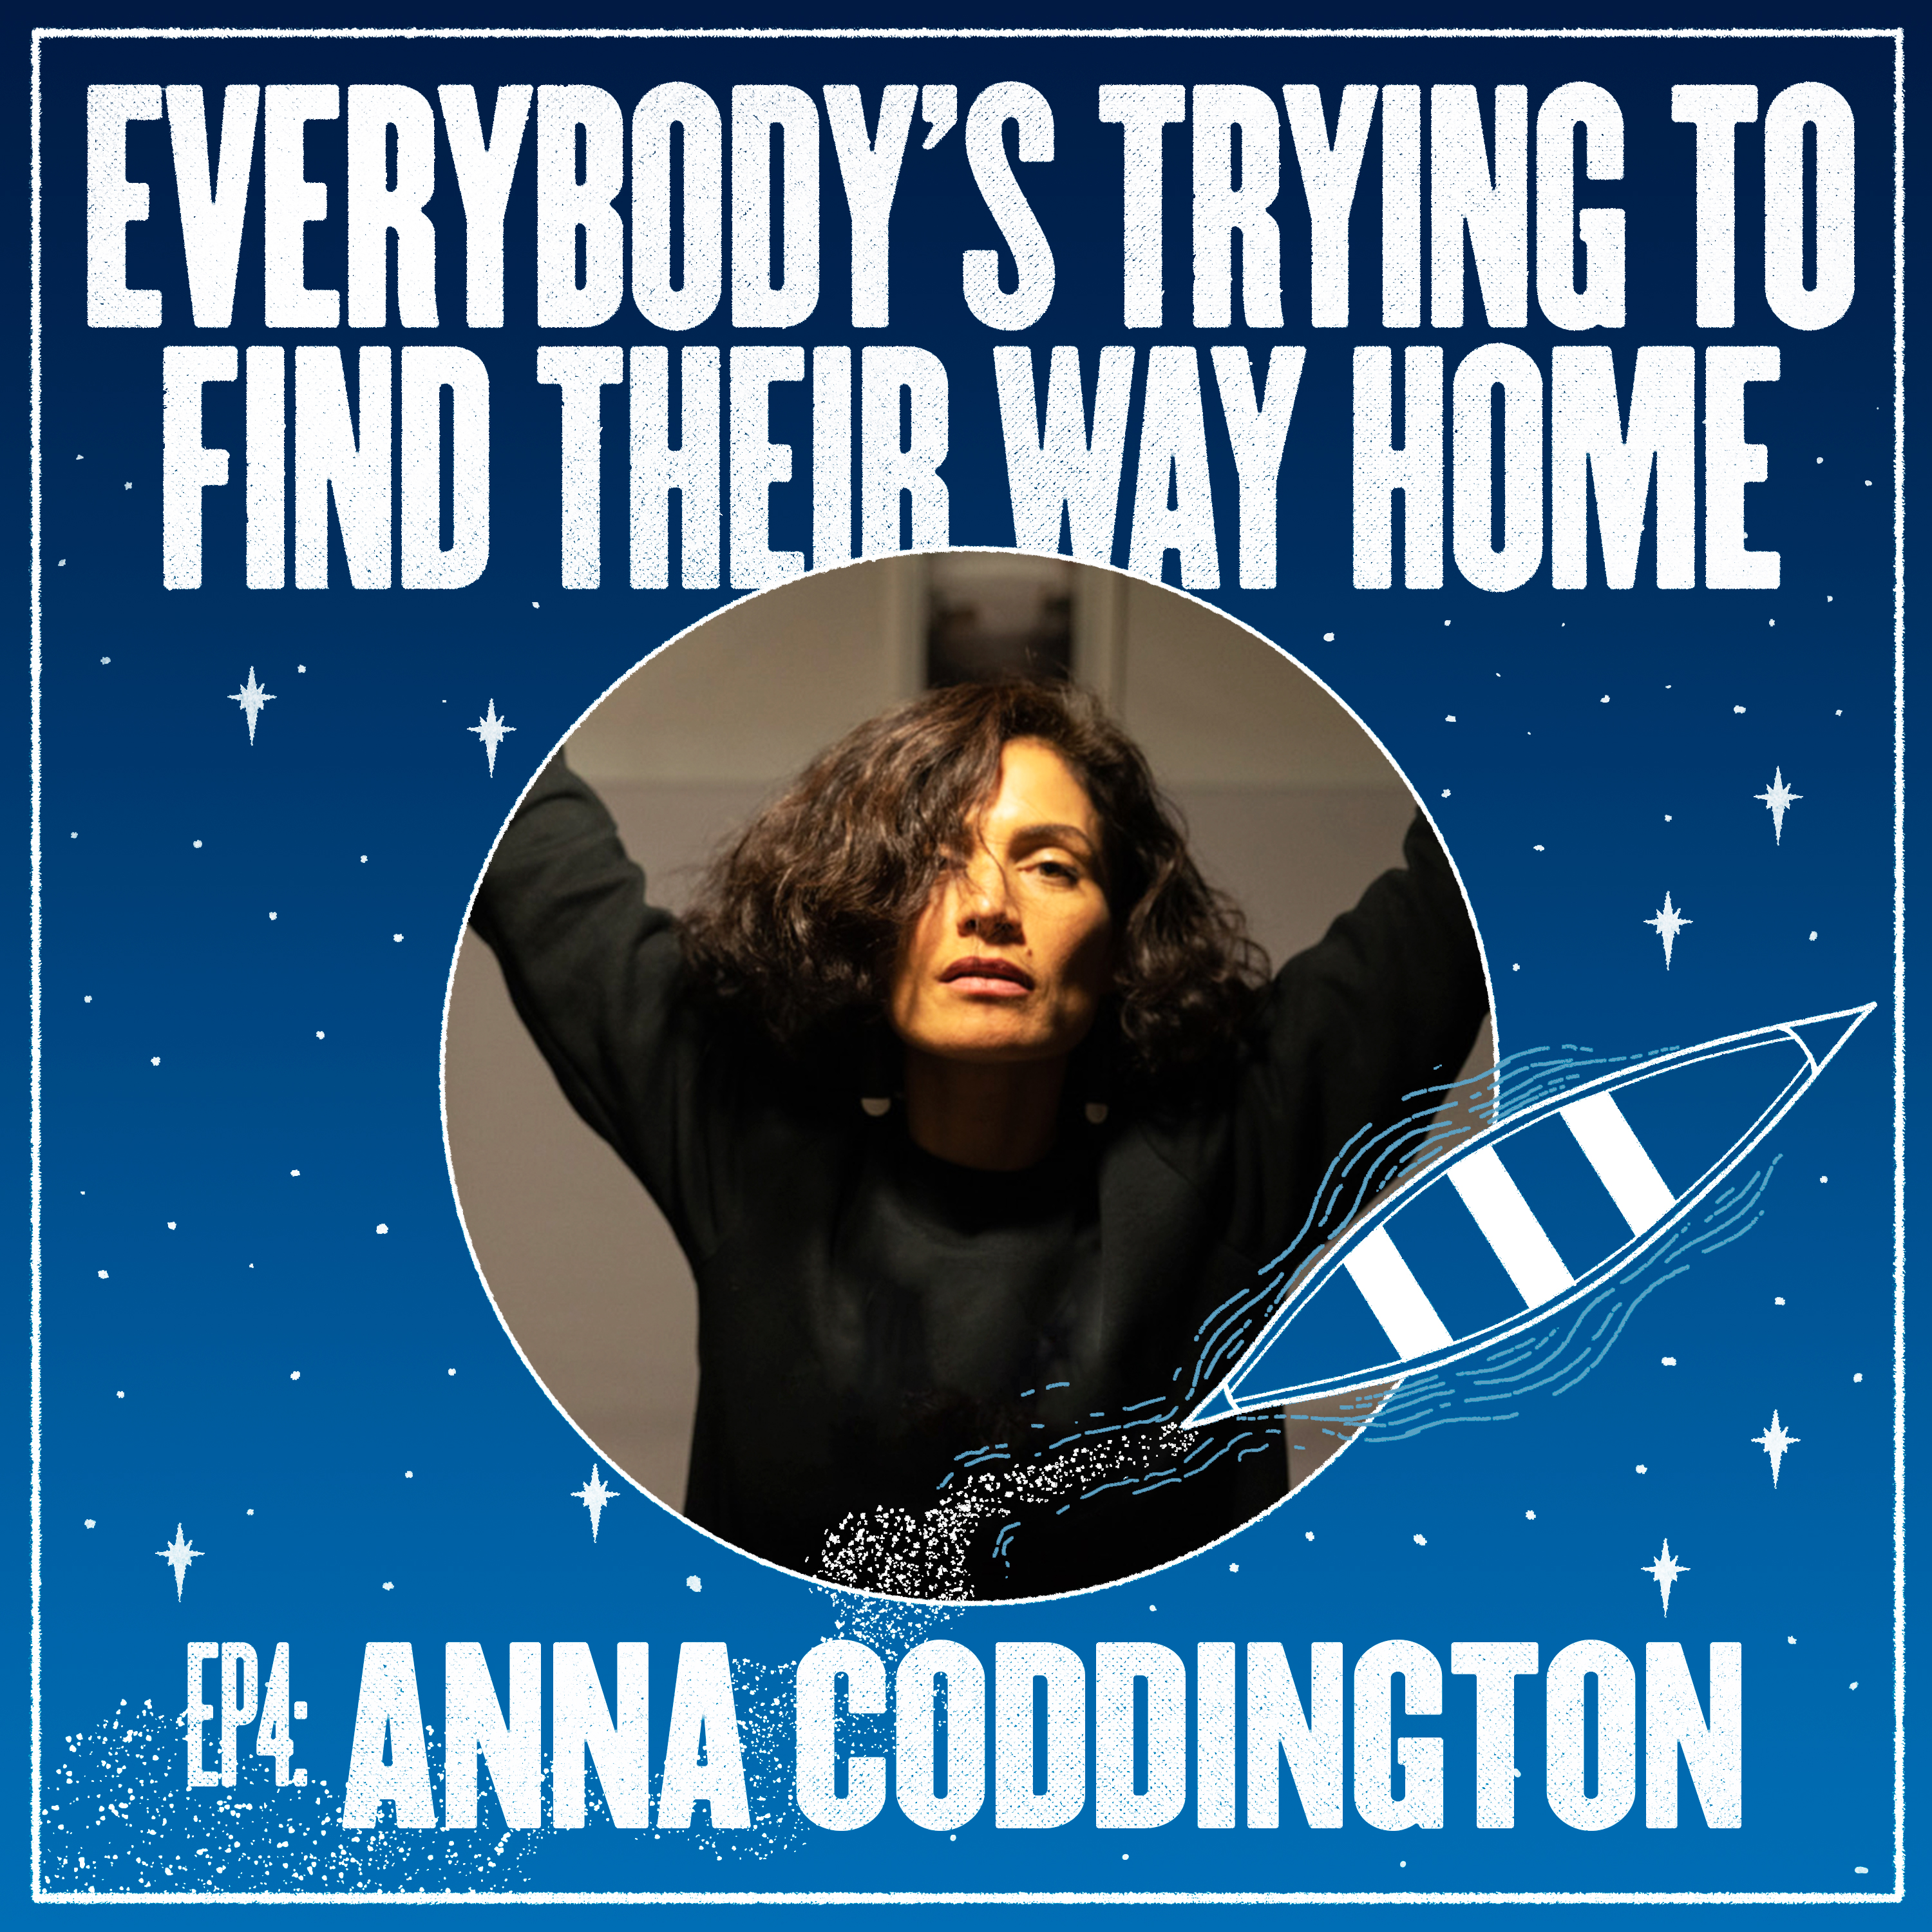 ANNA CODDINGTON: We Need These Stories